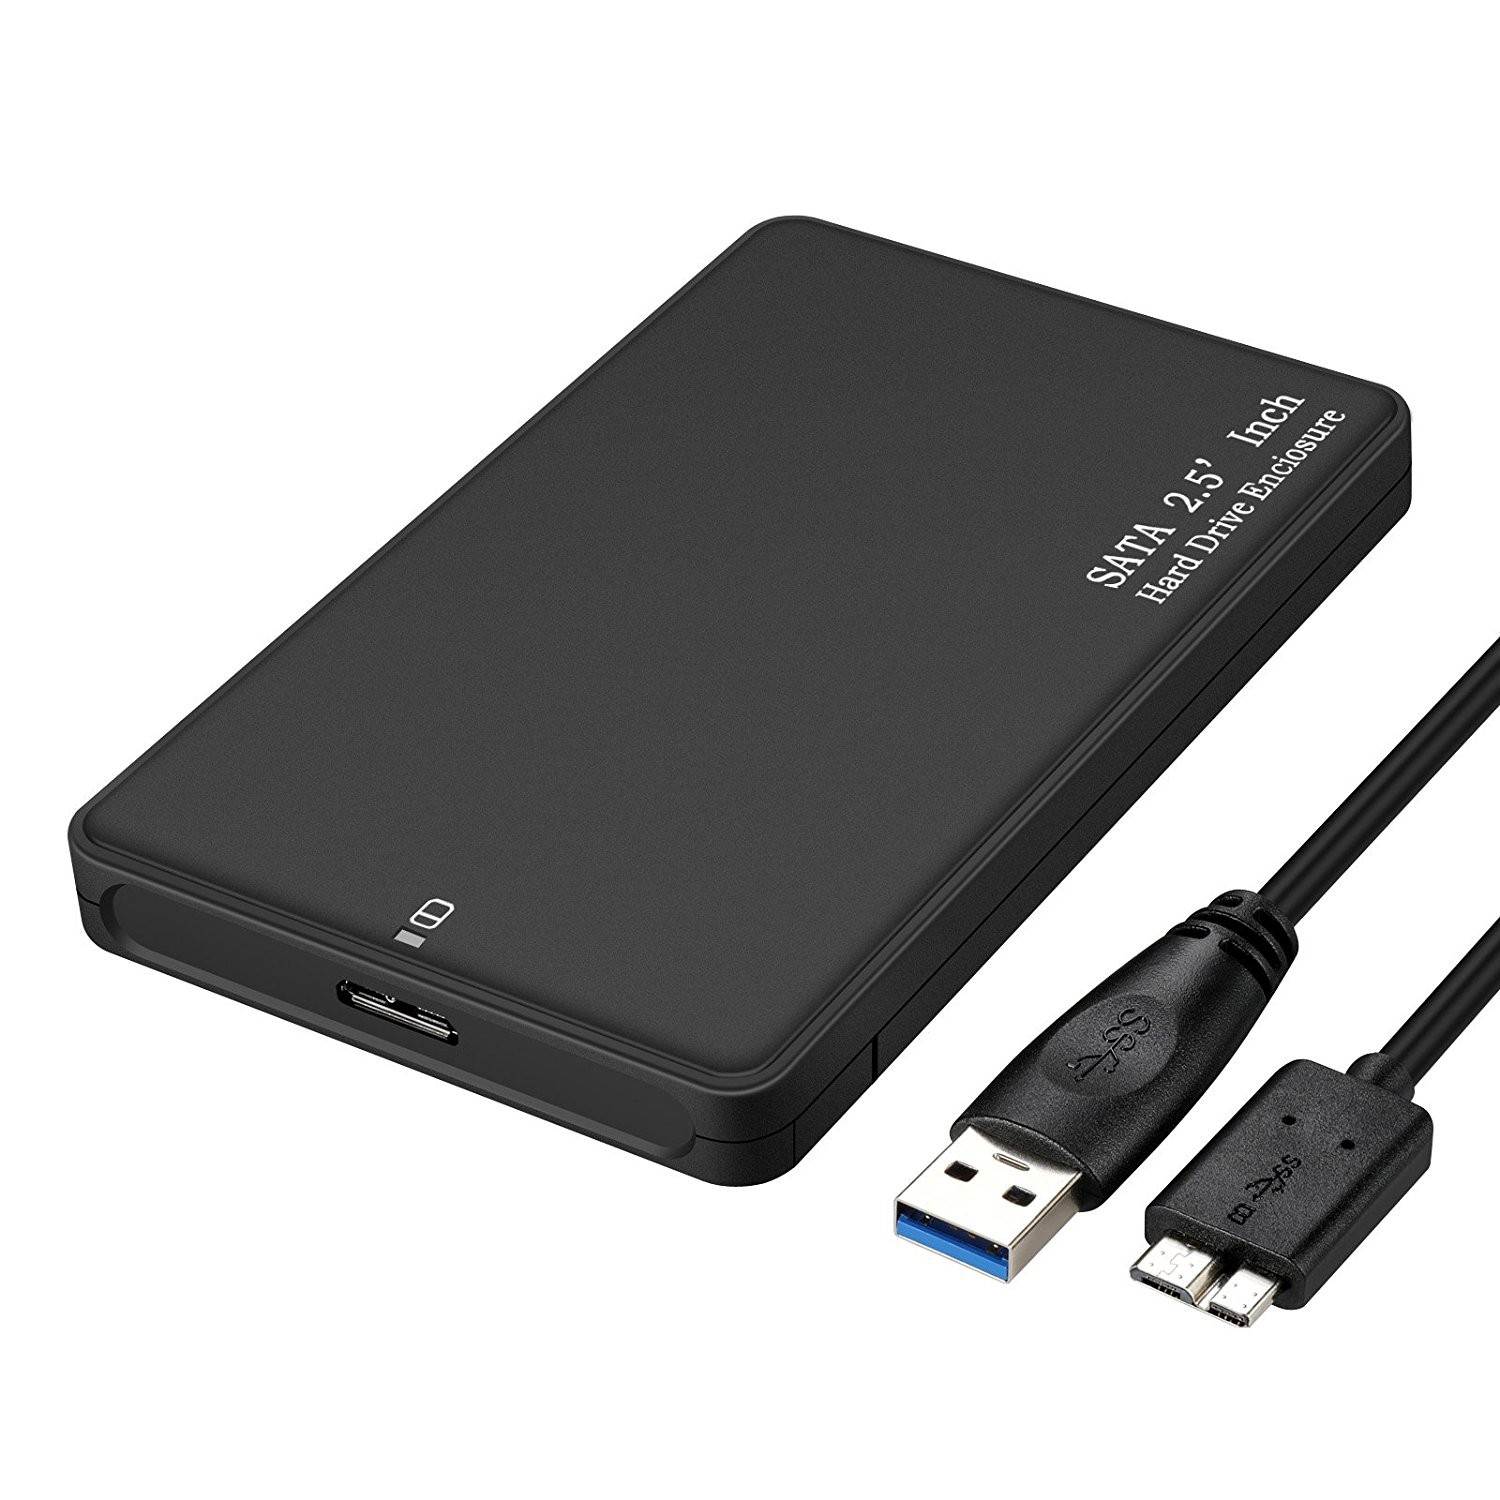 Unilink 2.5” SATA to USB 3.0 Hard Drive Enclosure - Black (Tool Free / UASP  / HDD SSD)